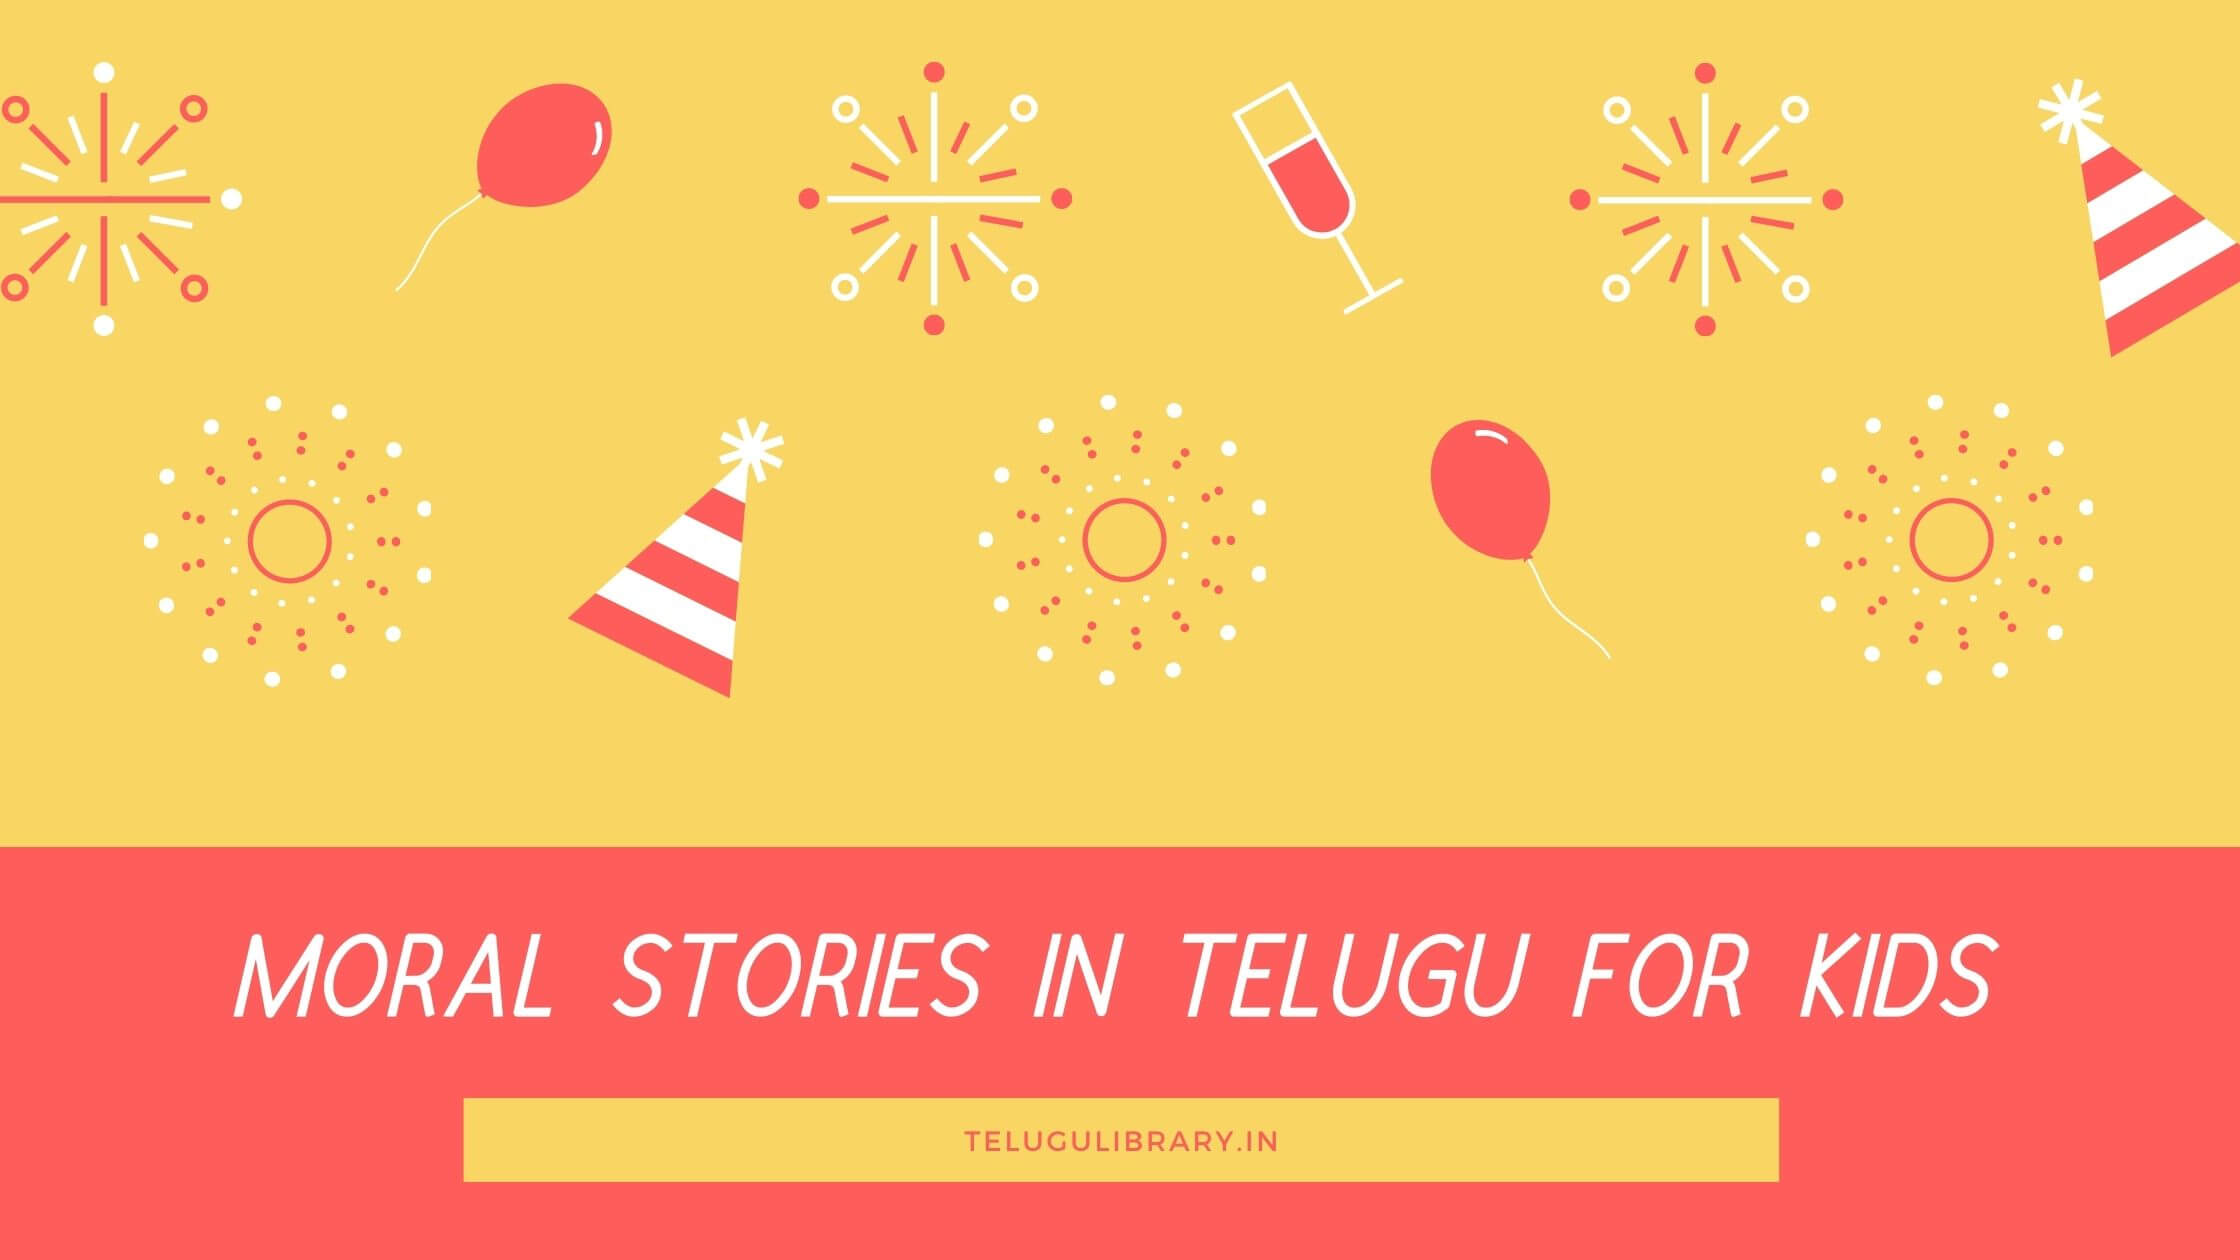 Moral stories in Telugu for kids